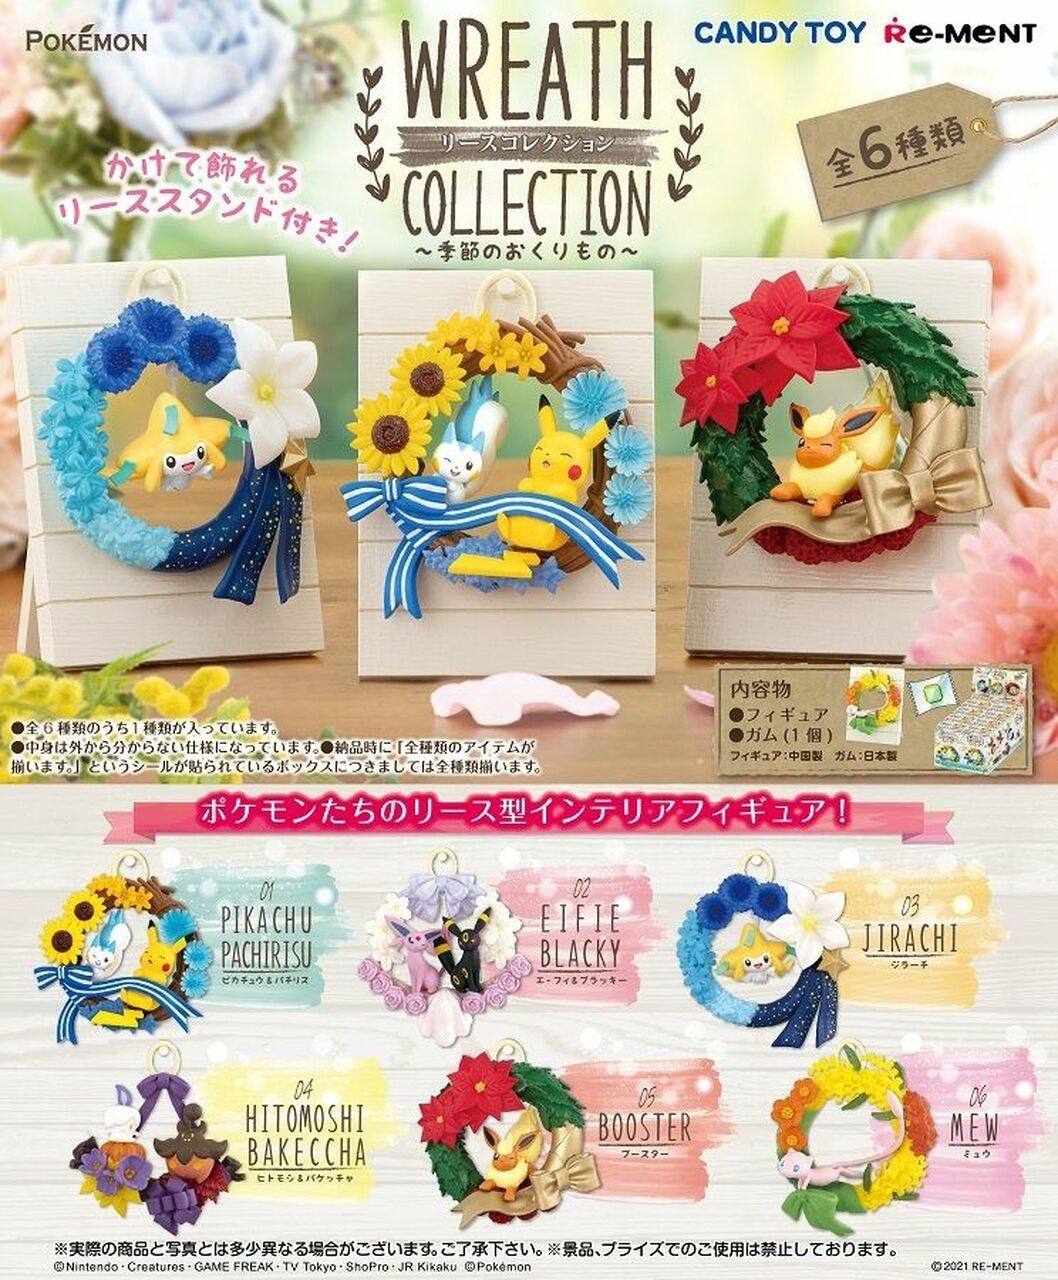 Re-ment Pokemon Wreath Collection: Saisonale Geschenk-Blindbox